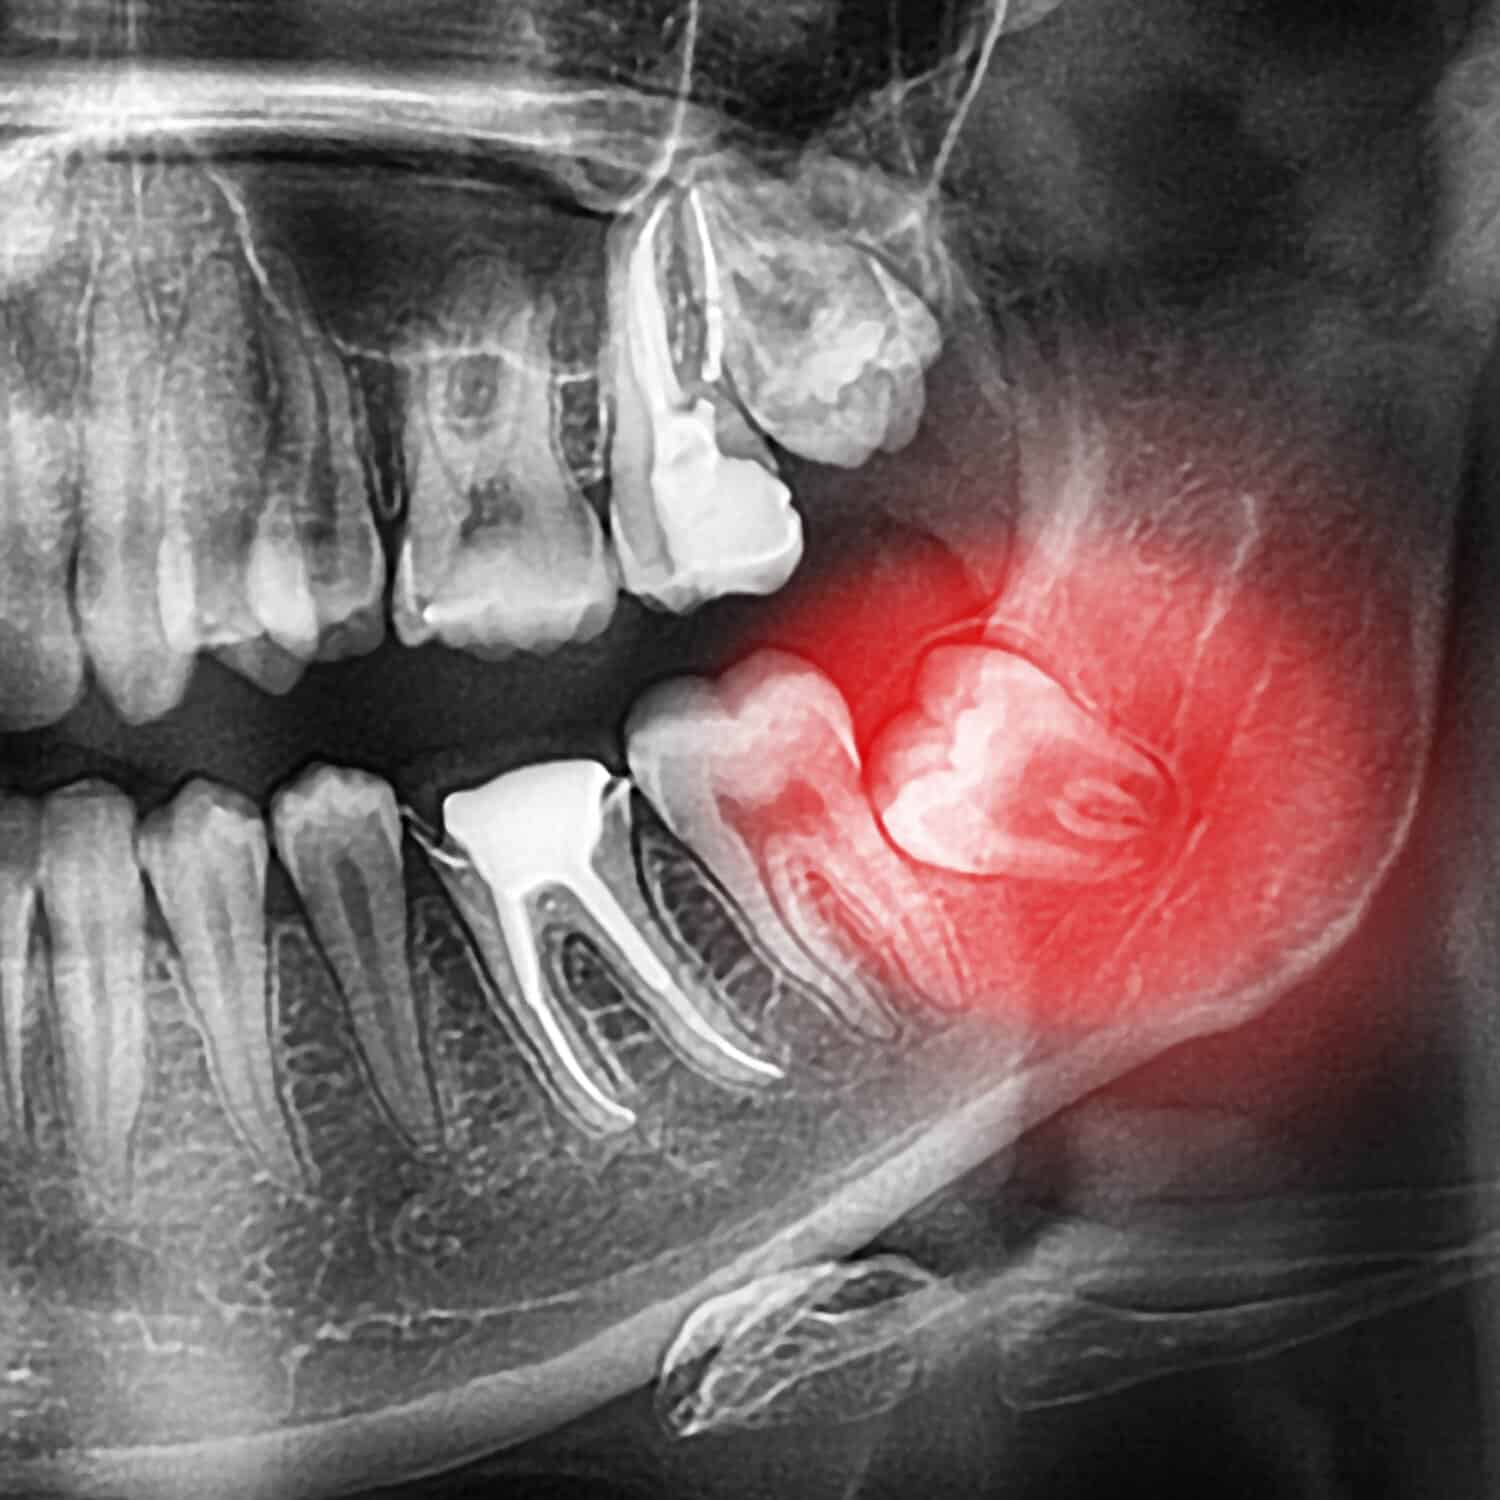 wisdom-teeth-featured-image-1306191280